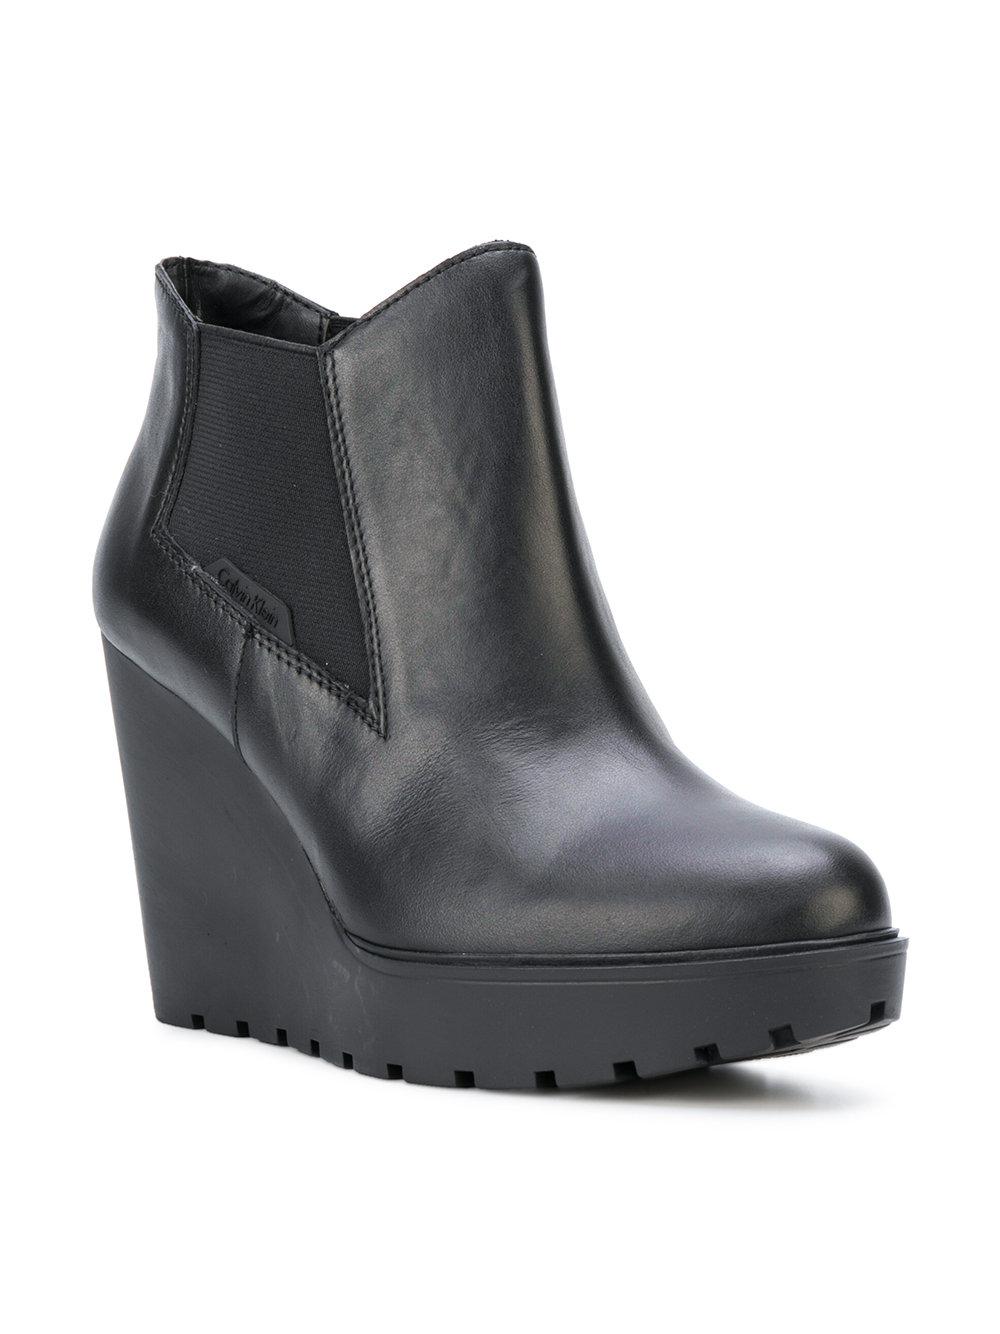 Calvin Klein Leather Platform Ankle Boots in Black - Lyst